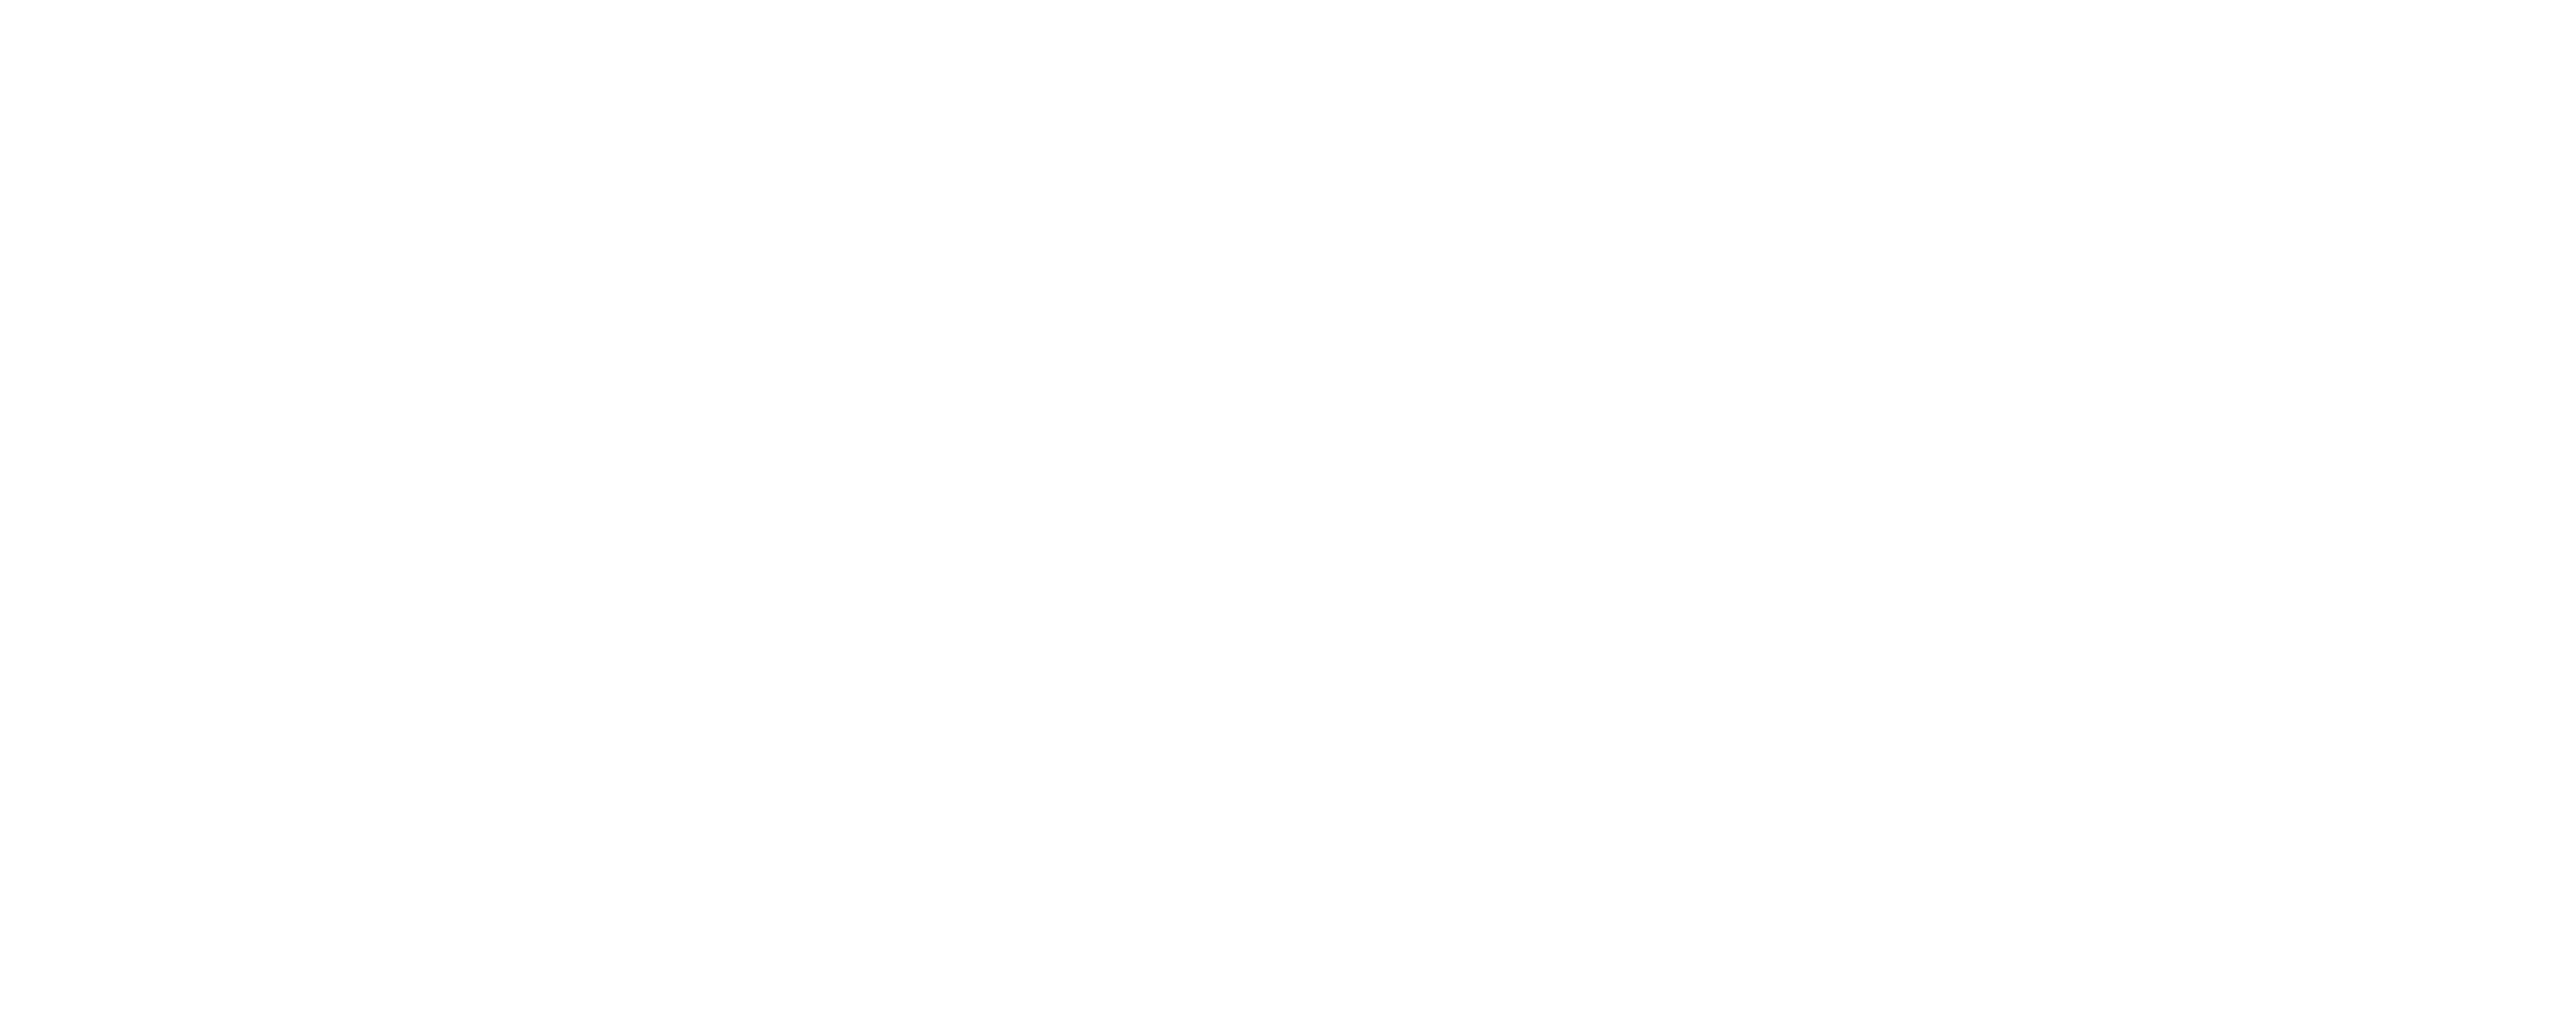 Snapper Logo - Whipper Snapper Logo - Snap Click Booth